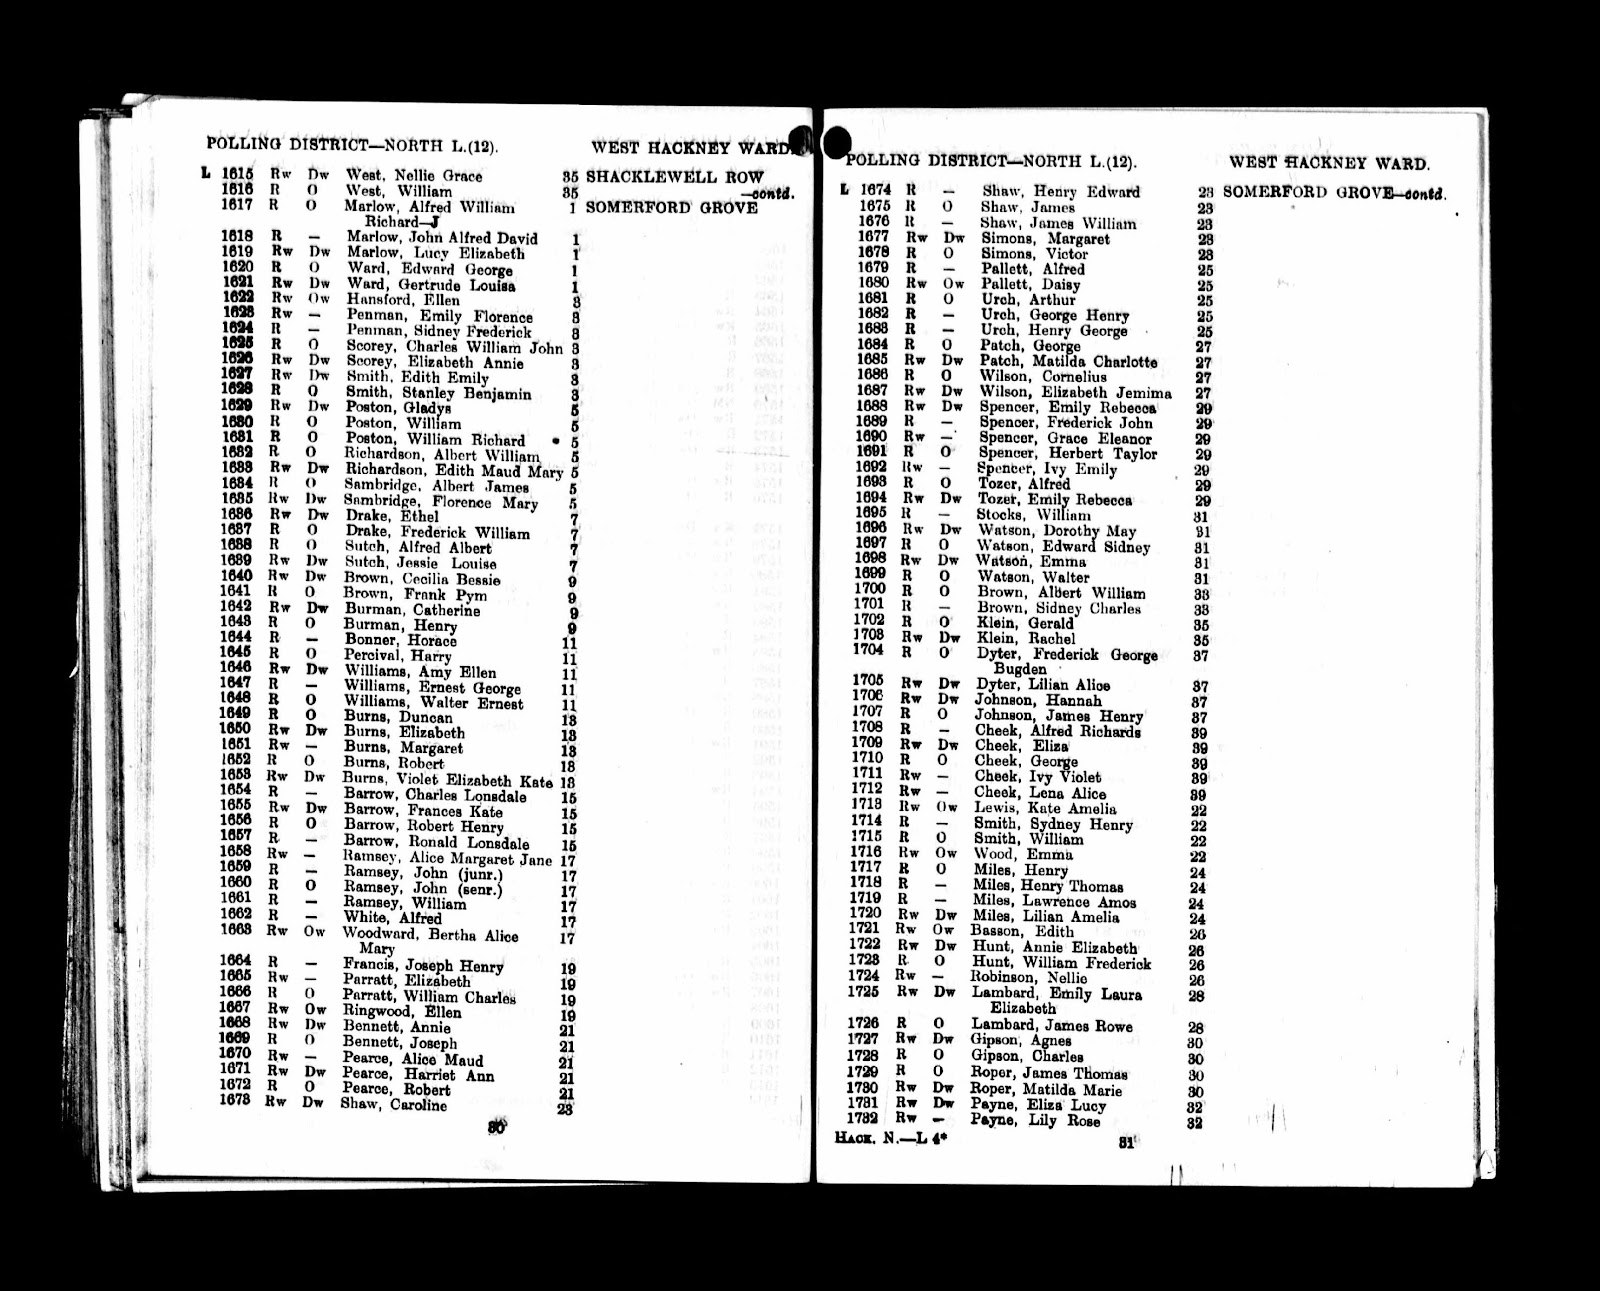 C:\Users\Main user\Documents\Ancestry\Dadaji\Lawrence Electoral\Lawrence Miles Electoral Register 1934 Hackney Original.jpg